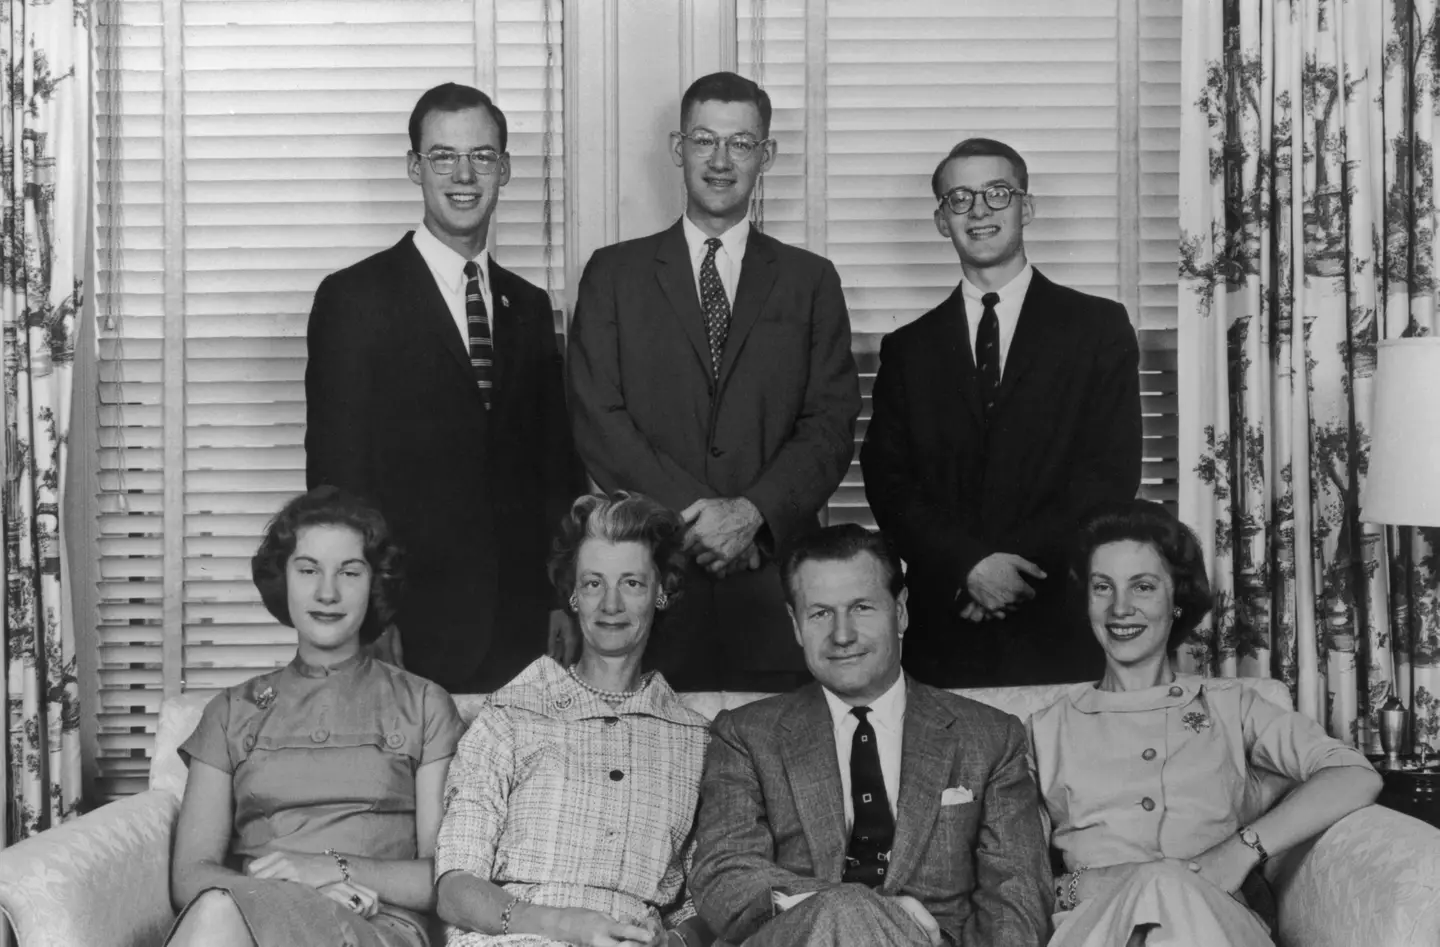 The Rockerfeller family (Michael, top right).